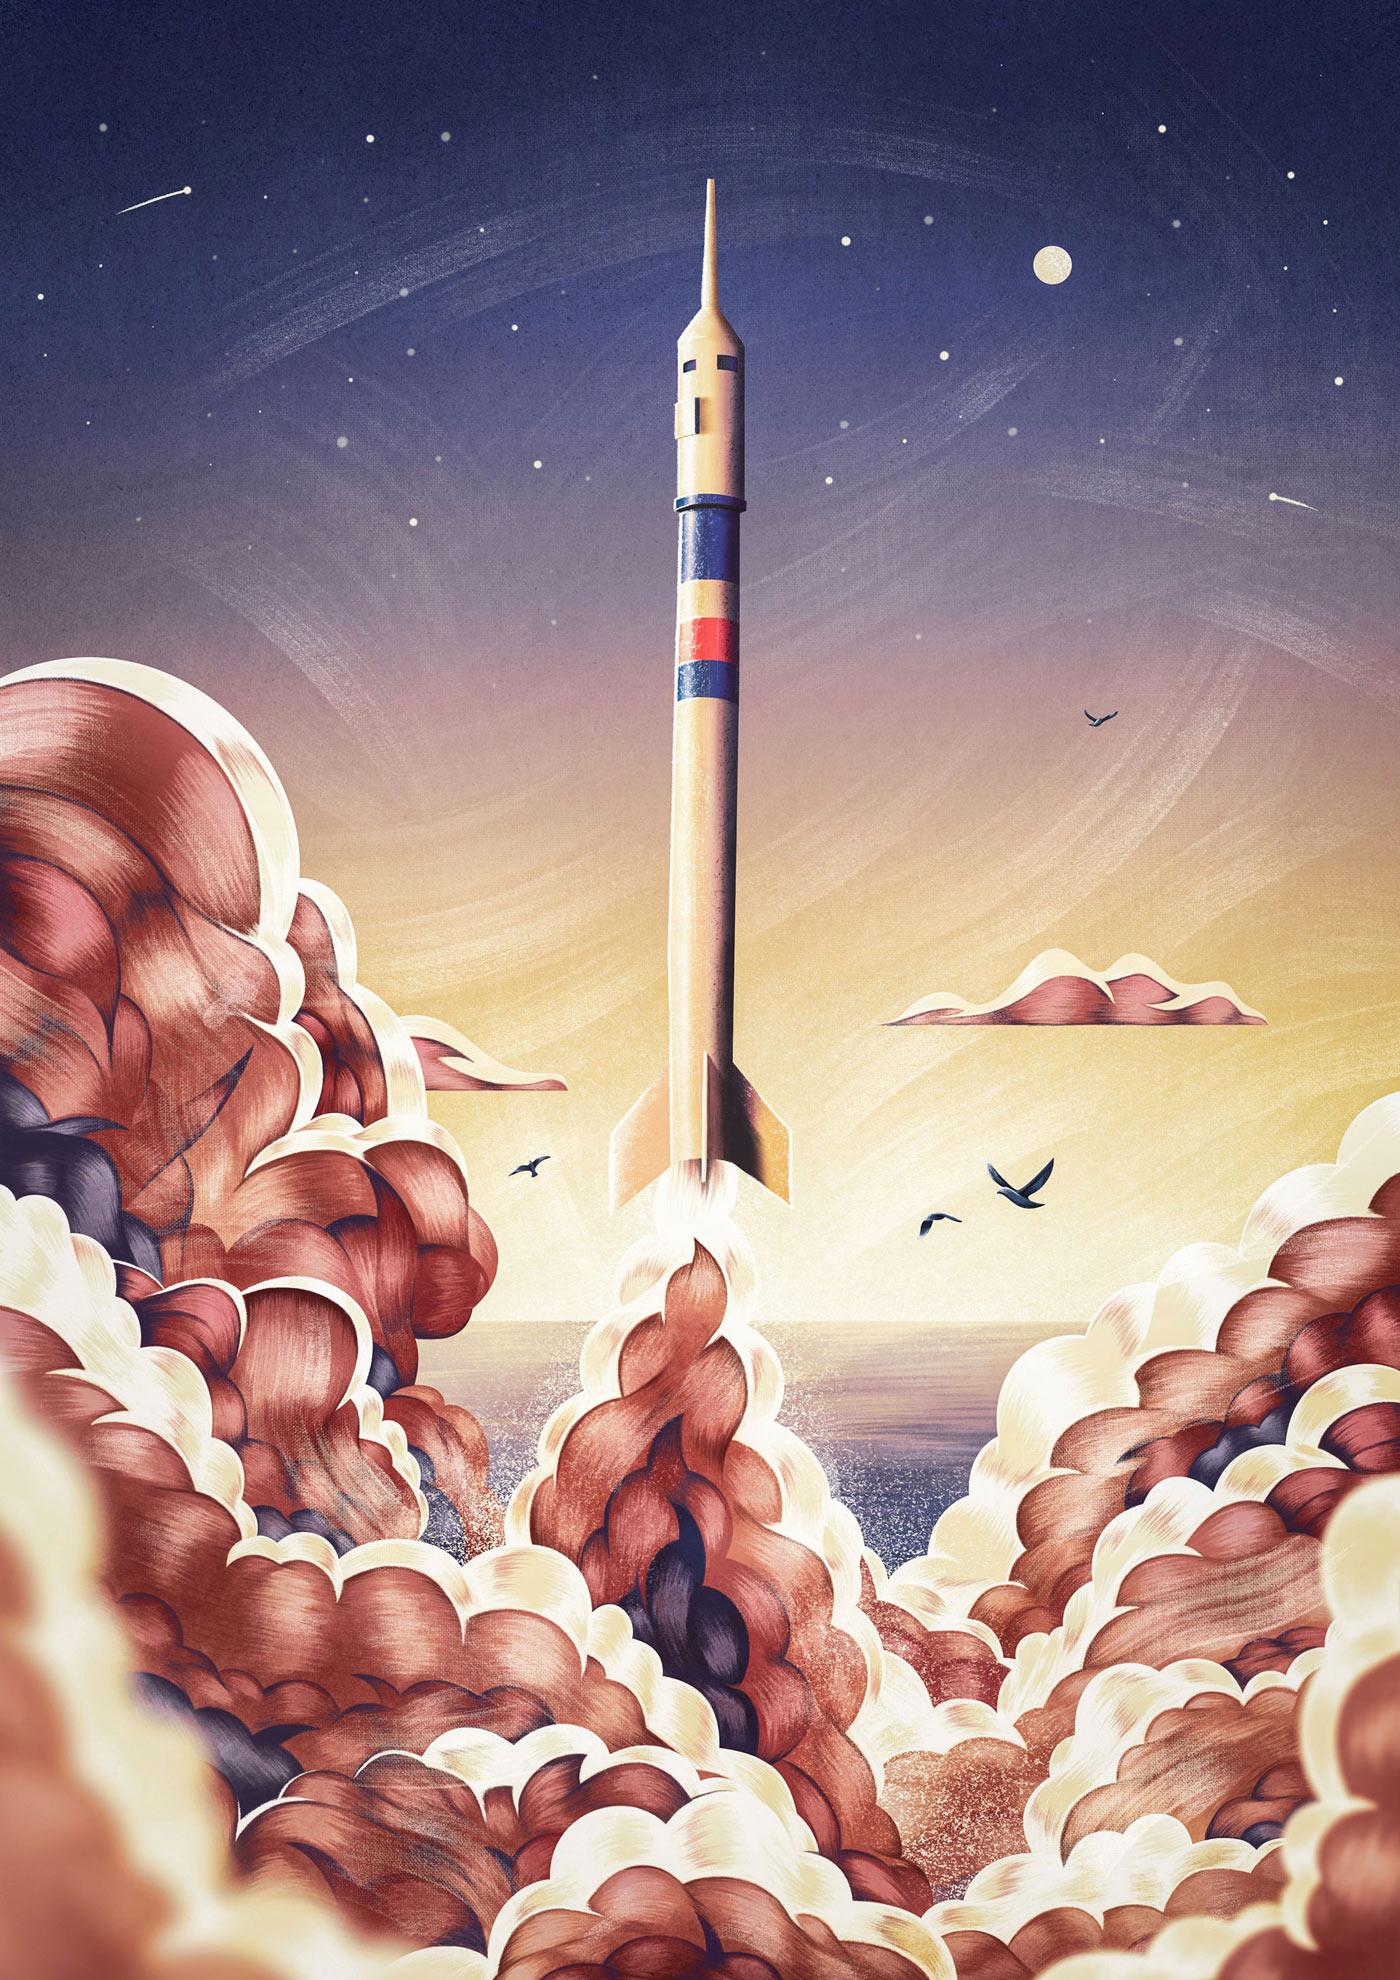 Rocket-1